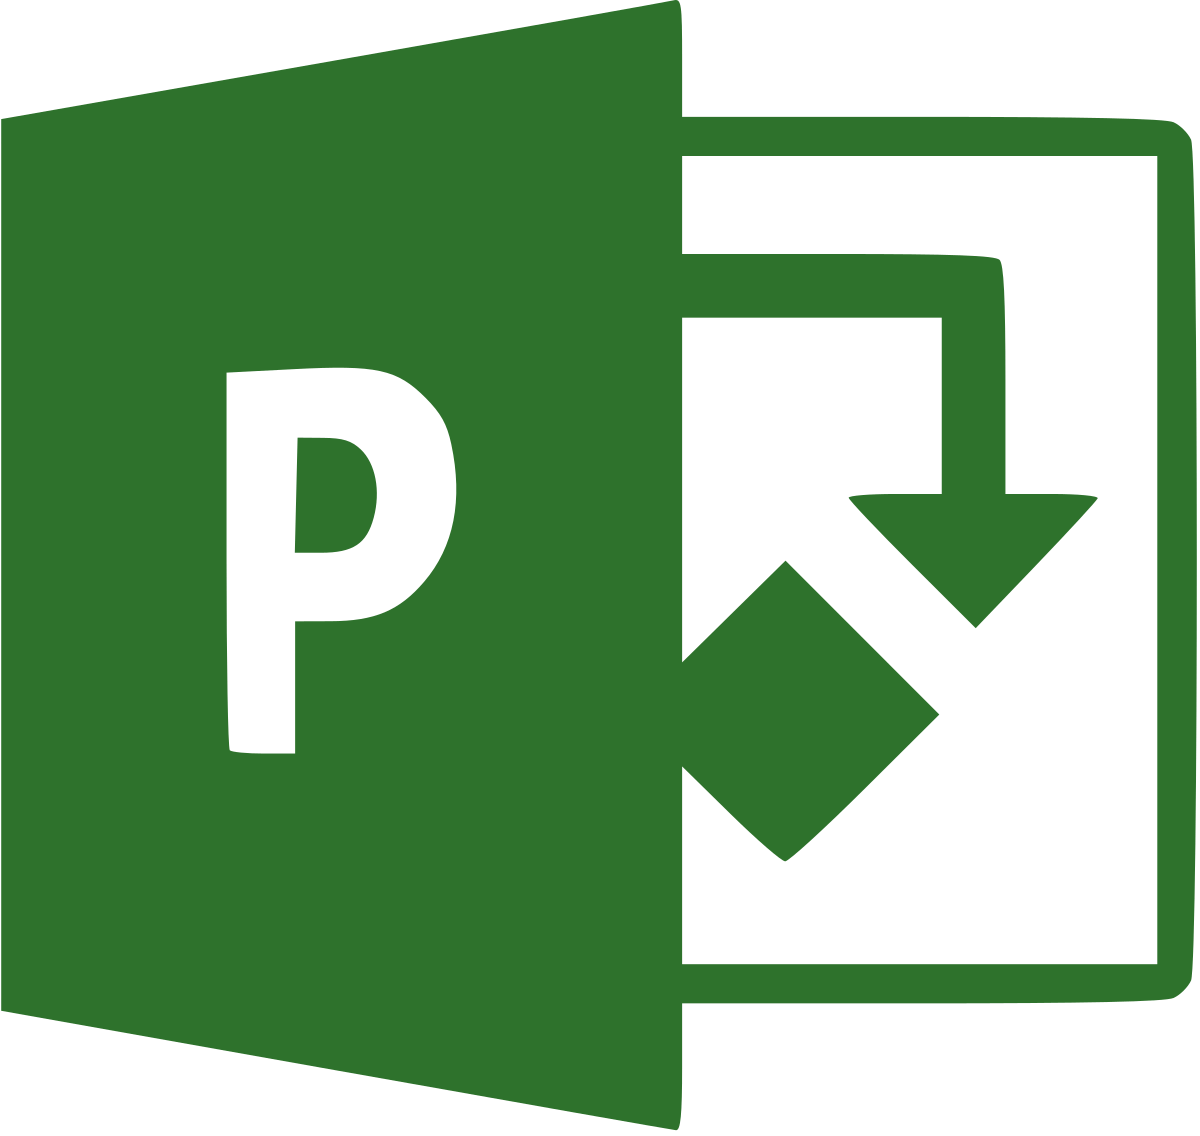 Old Microsoft Word Logo - Microsoft Project